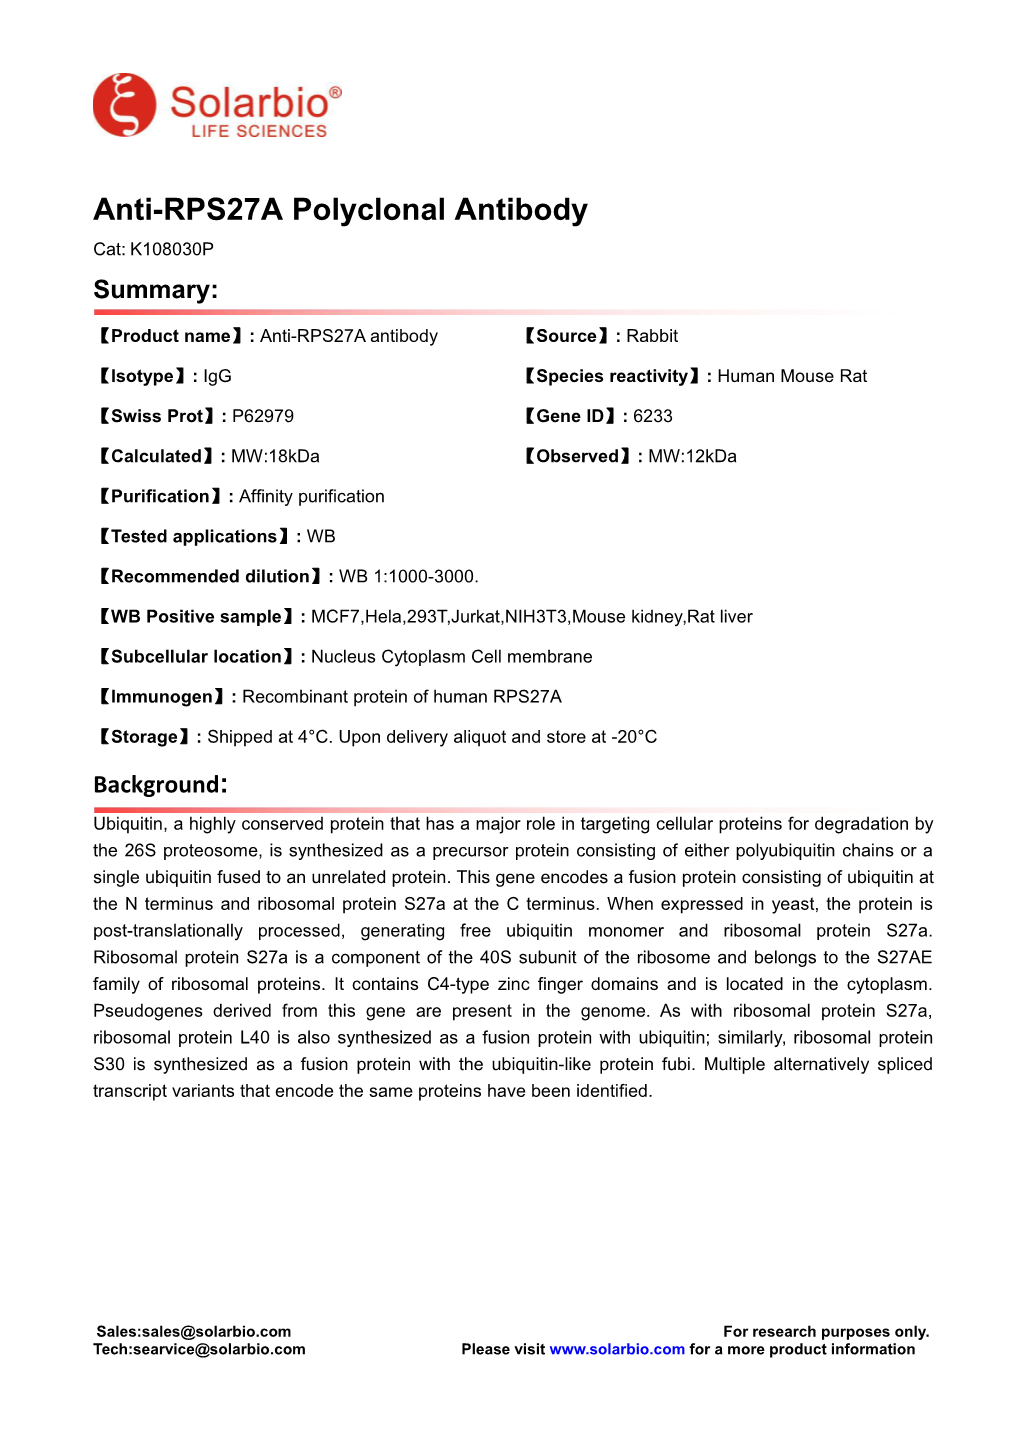 Anti-RPS27A Polyclonal Antibody Cat: K108030P Summary